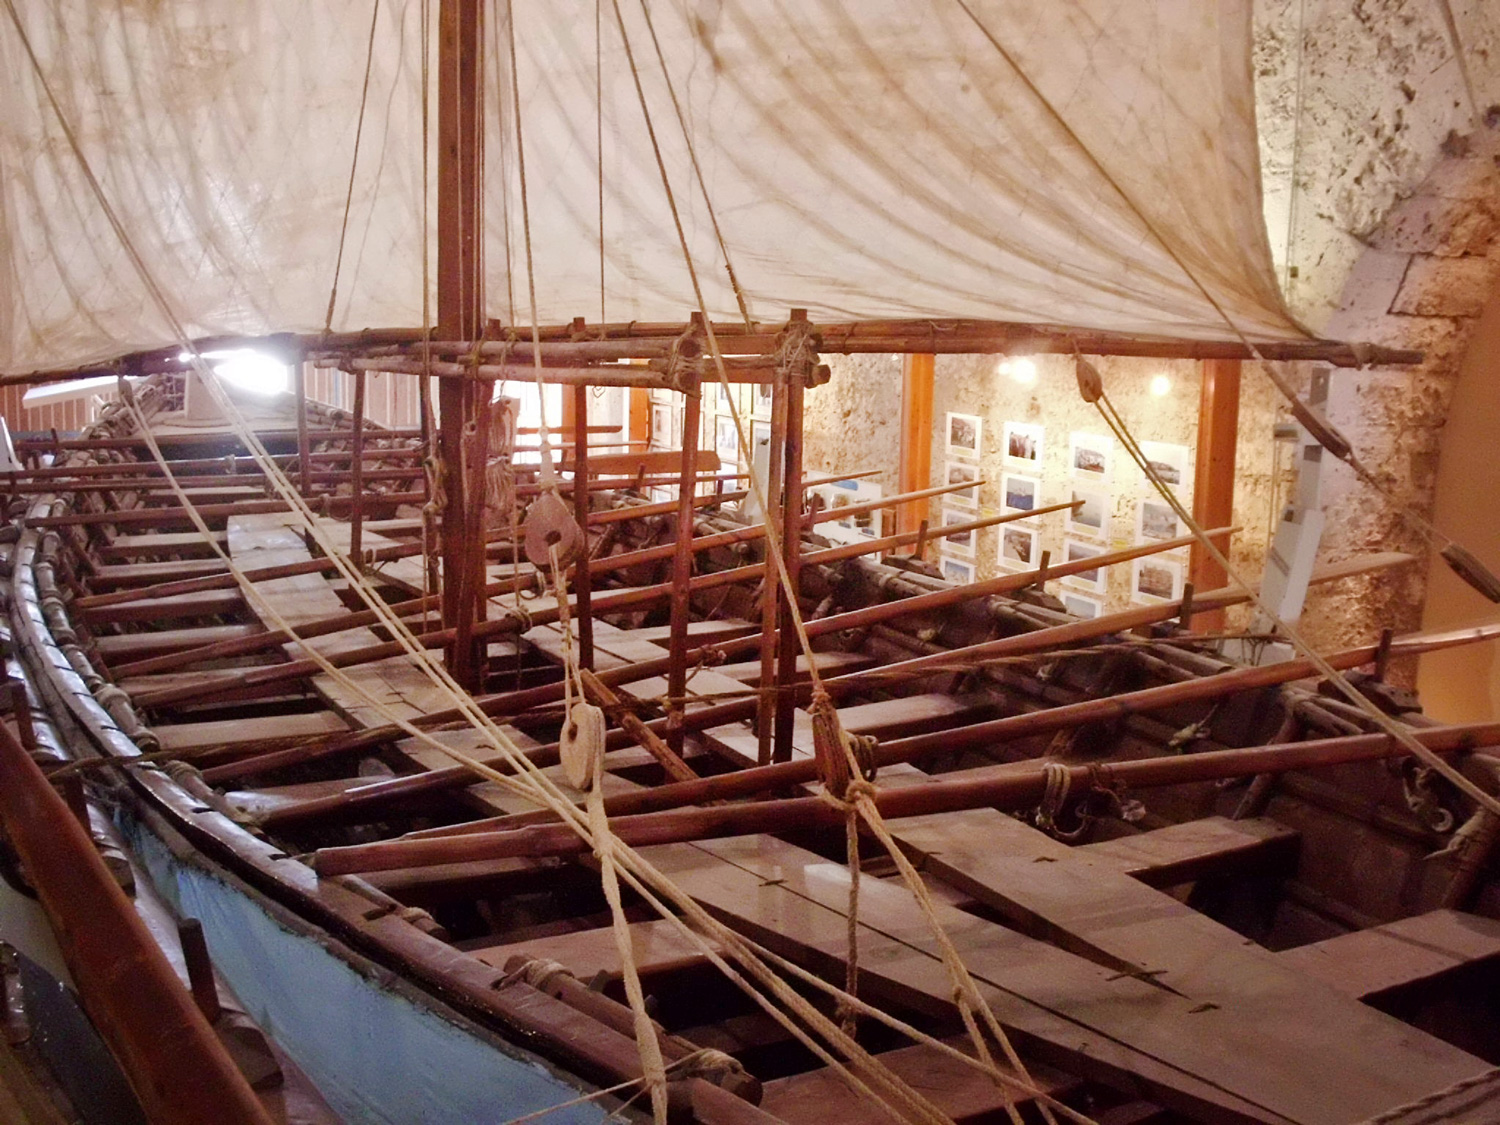 The Minoan Ship